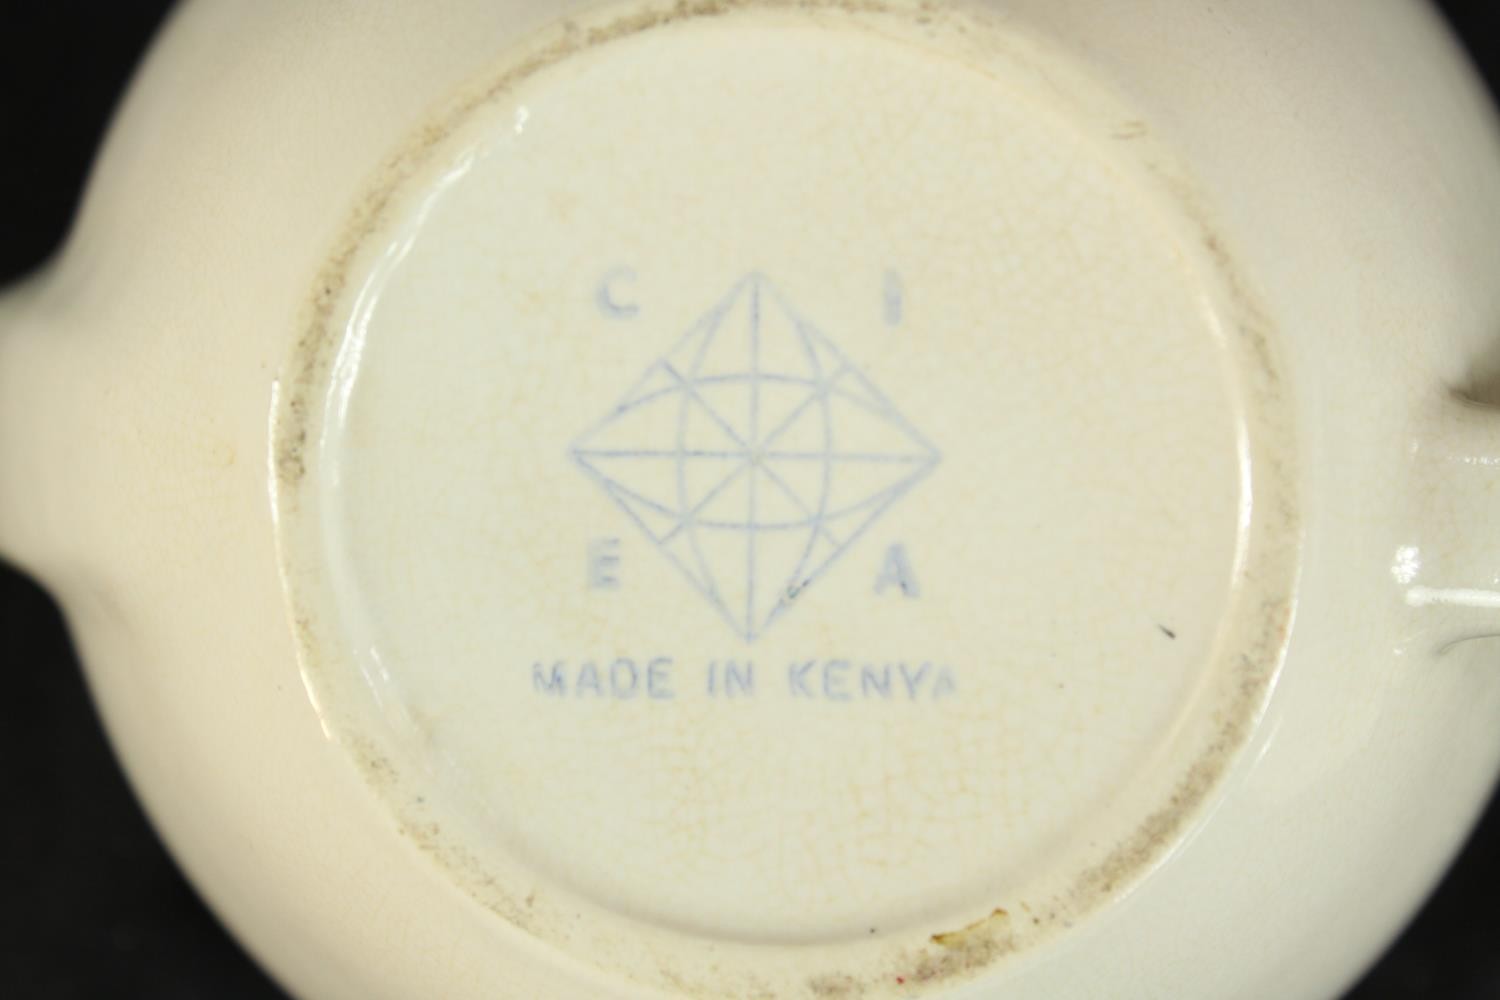 A mid 20th century Kenyan porcelain part tea set to include cups, saucers, milk jug, lidded sugar - Image 9 of 9